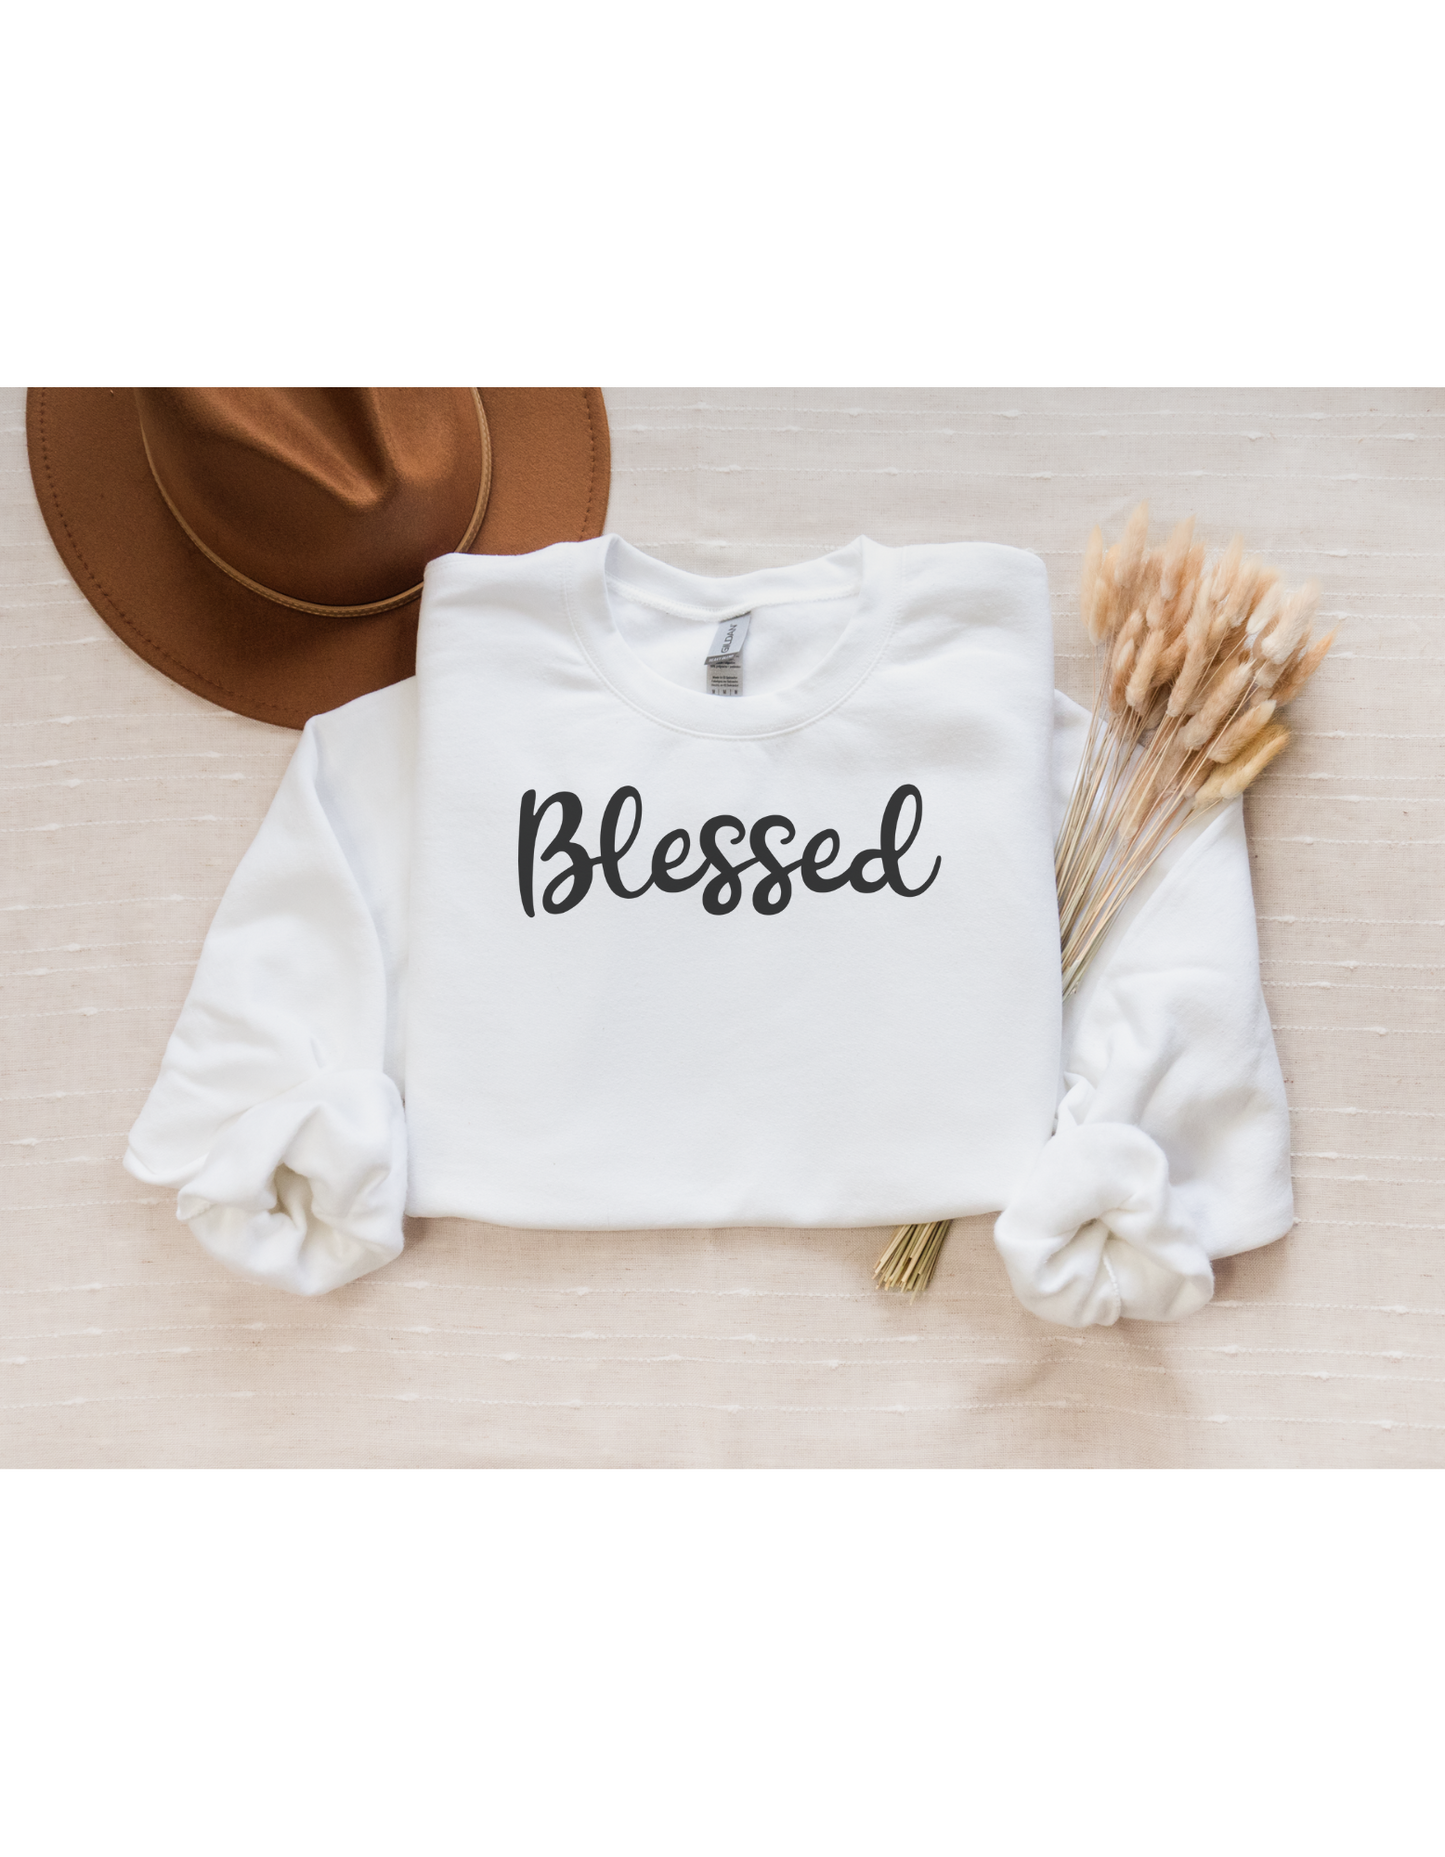 Blessed Sweatshirt, Faith Shirt, Christian Sweatshirt